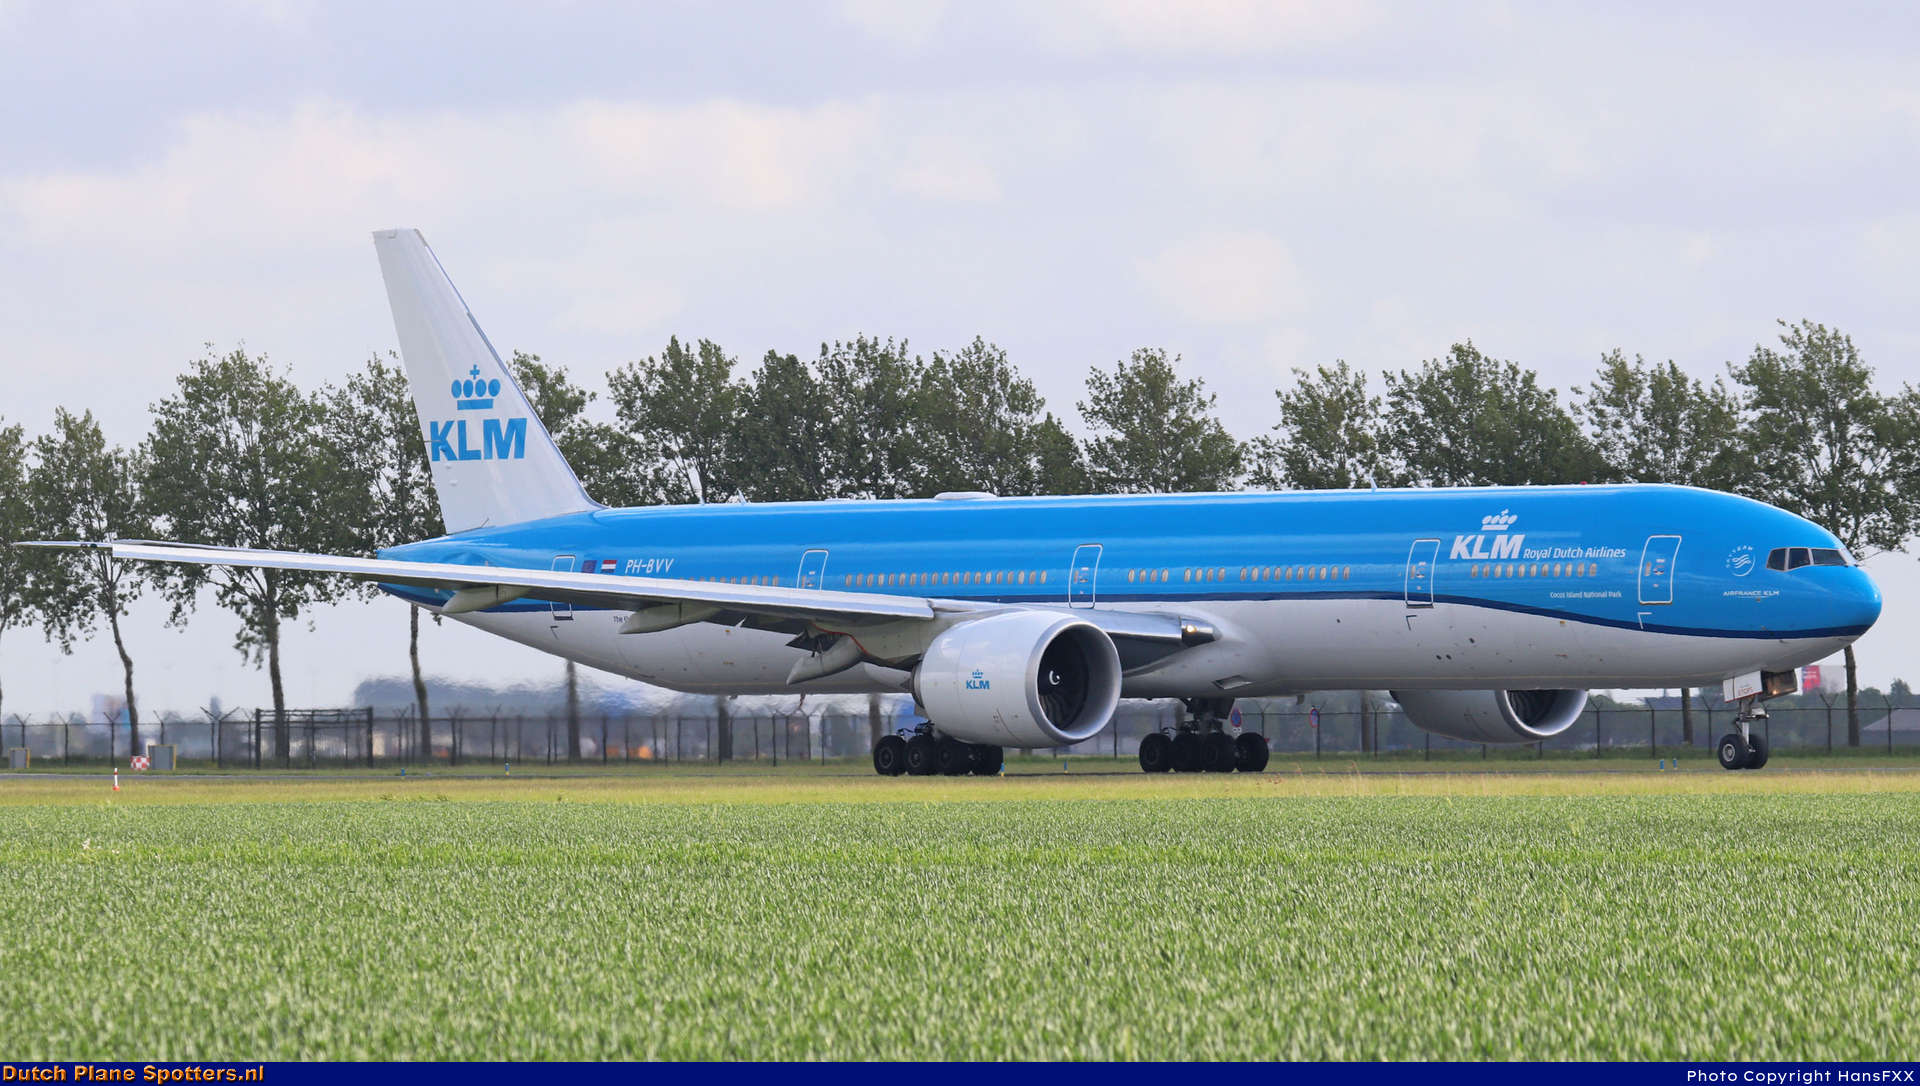 PH-BVV Boeing 777-300 KLM Royal Dutch Airlines by HansFXX